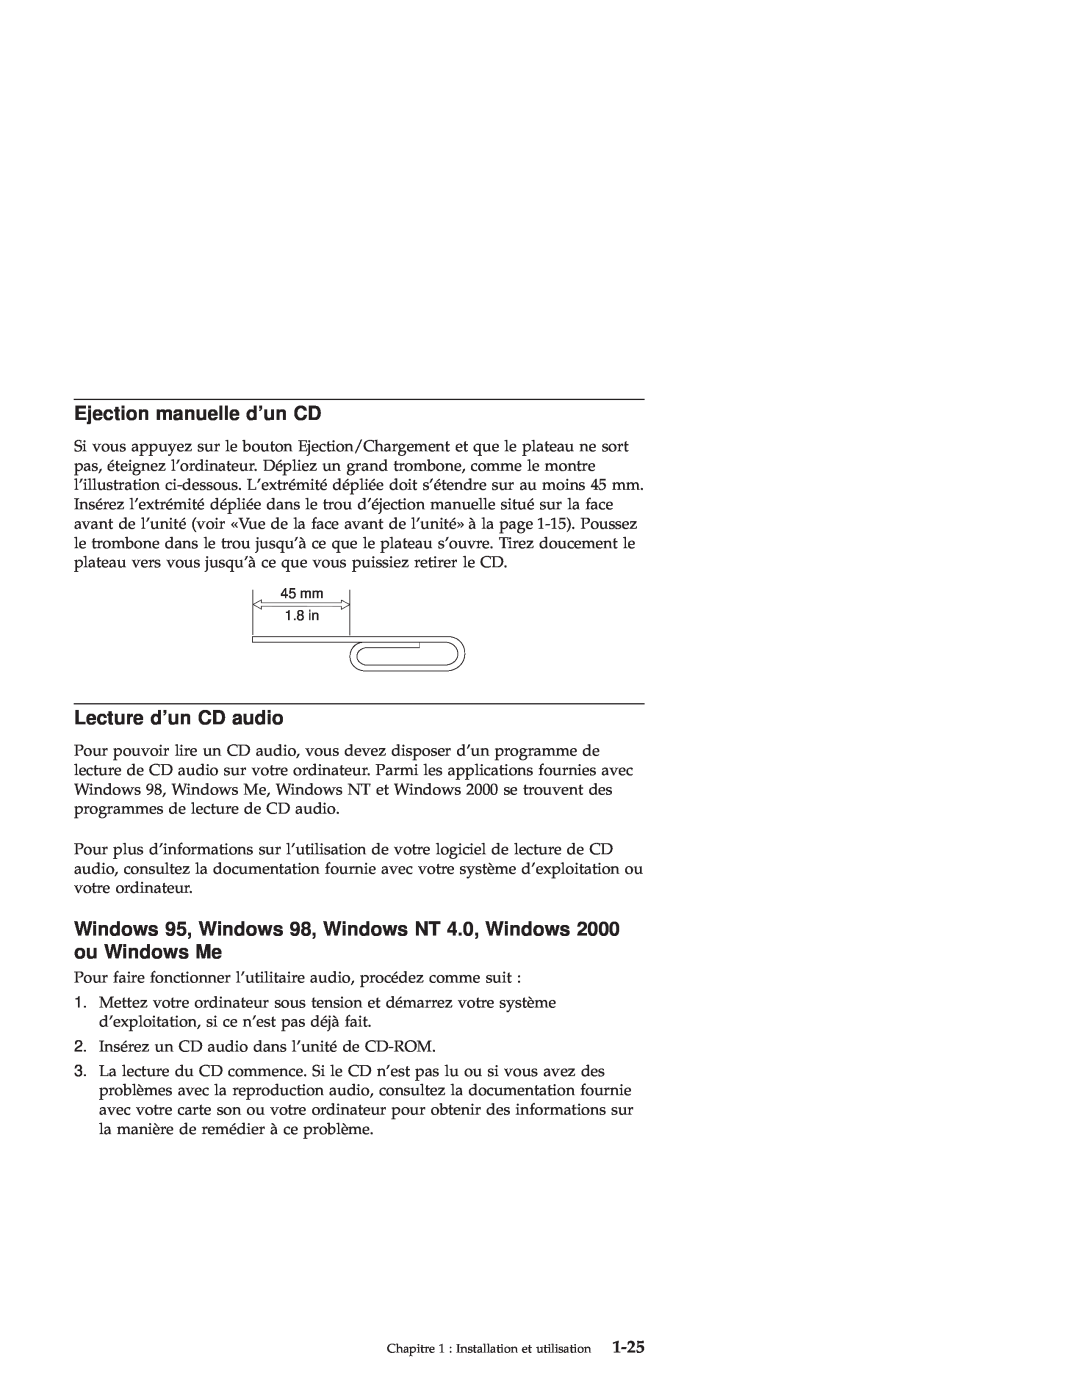 IBM 71P7279 manual Ejection manuelle dun CD, Lecture dun CD audio, 1-25 